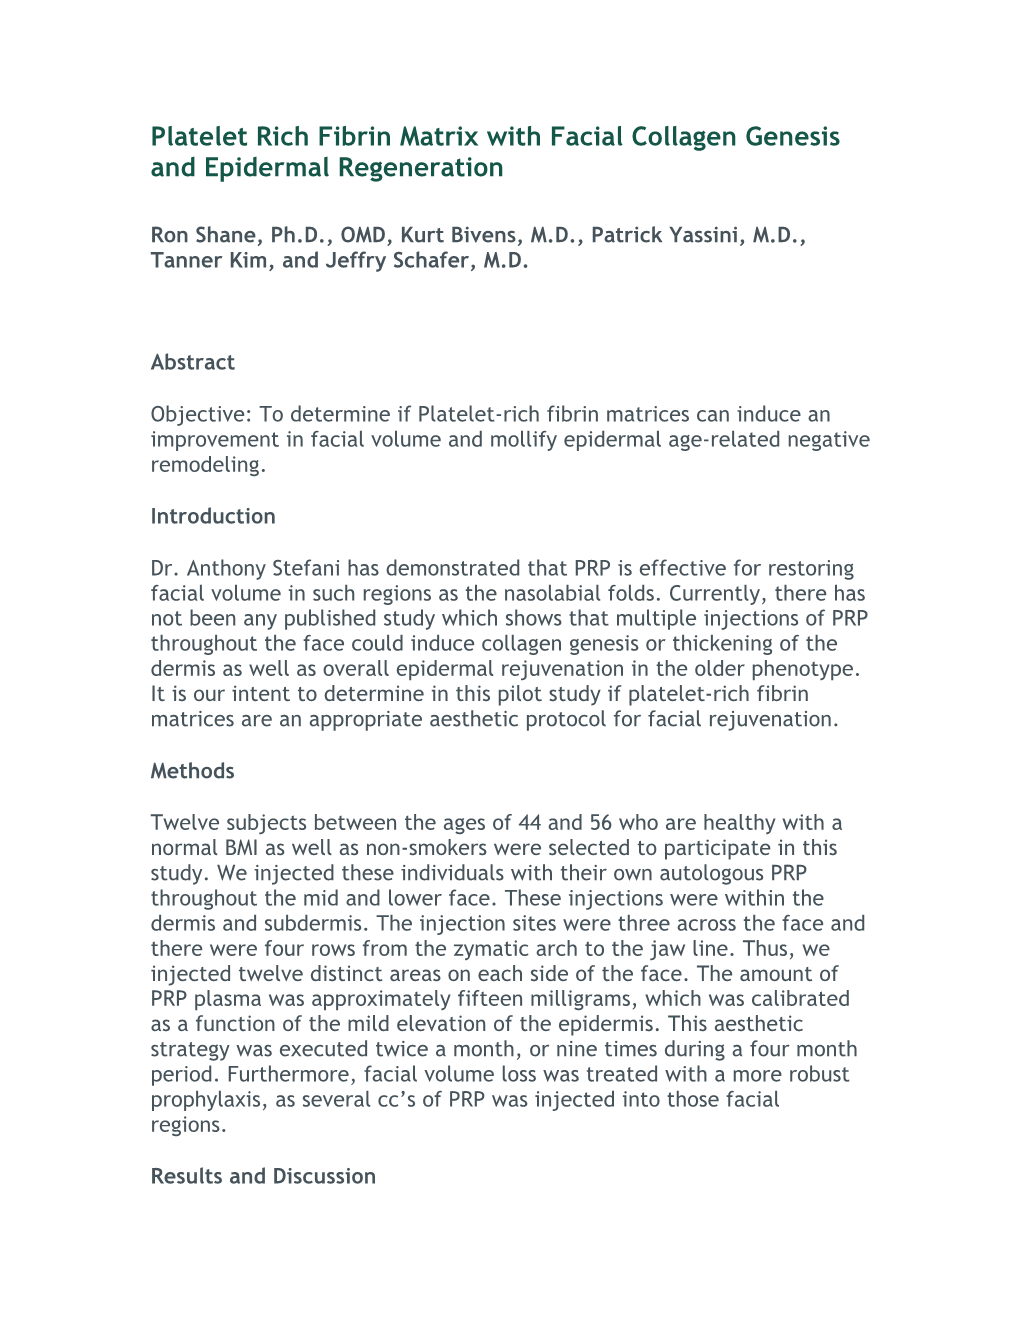 Platelet Rich Fibrin Matrix with Facial Collagen Genesis and Epidermal Regeneration